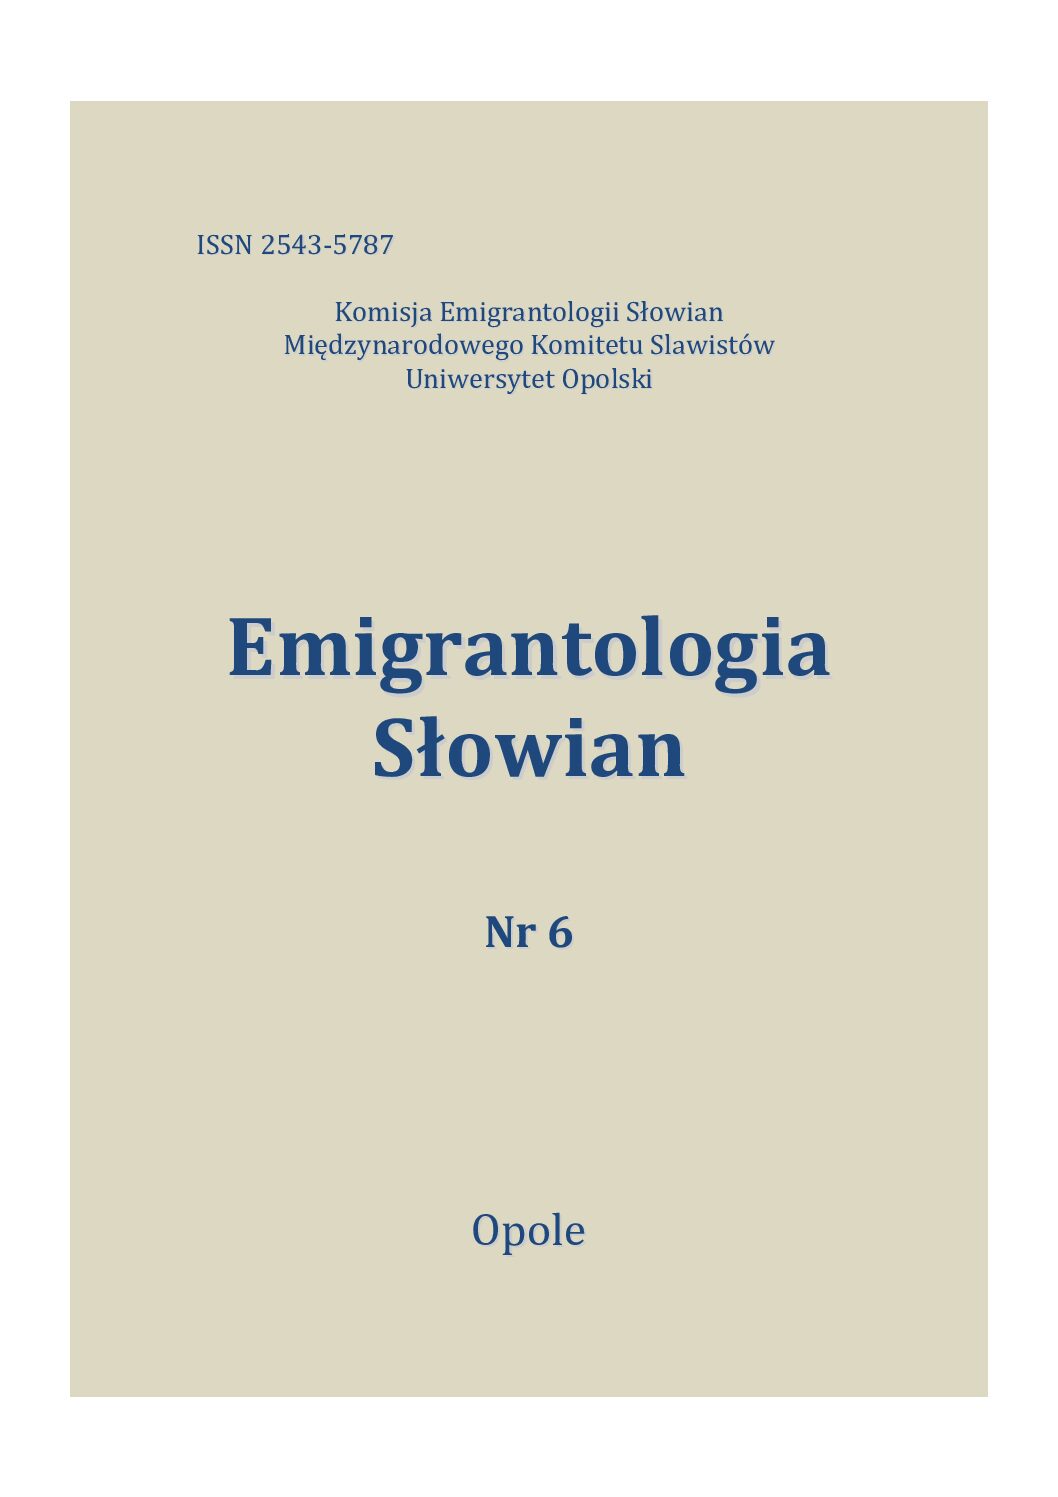 “Emigrantologia Słowian” vol. 6 (2020)